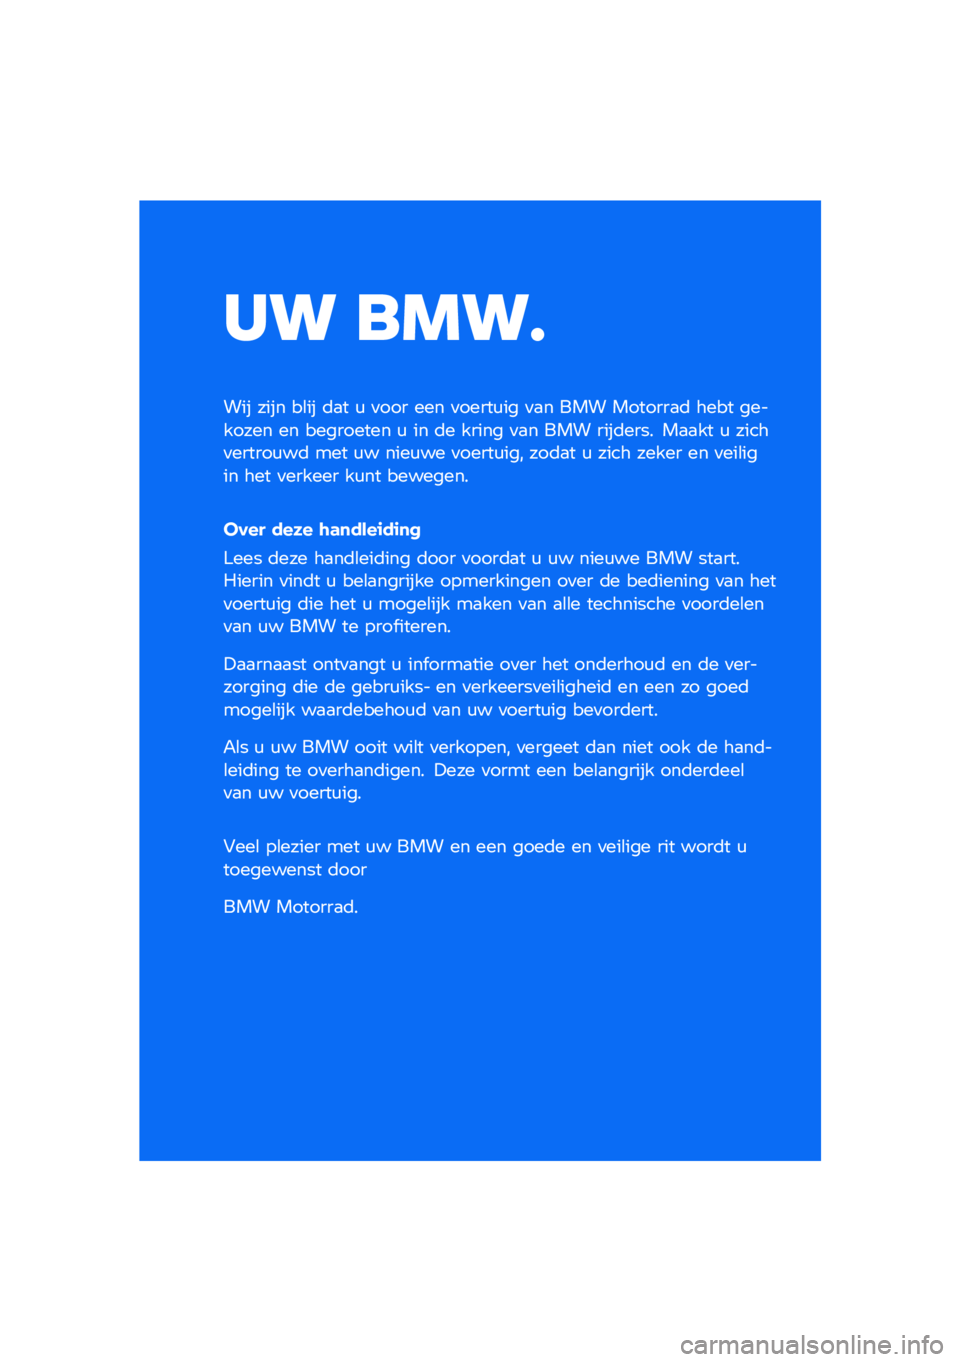 BMW MOTORRAD CE 04 2021  Handleiding (in Dutch) �� ����
��� ���� ��\b�� �	�
� �\f �
��� ��� �
�����\f�� �
�
� ��� �������
�	 ���� �������� �� ��������� �\f �� �	� ����� �
�
� �